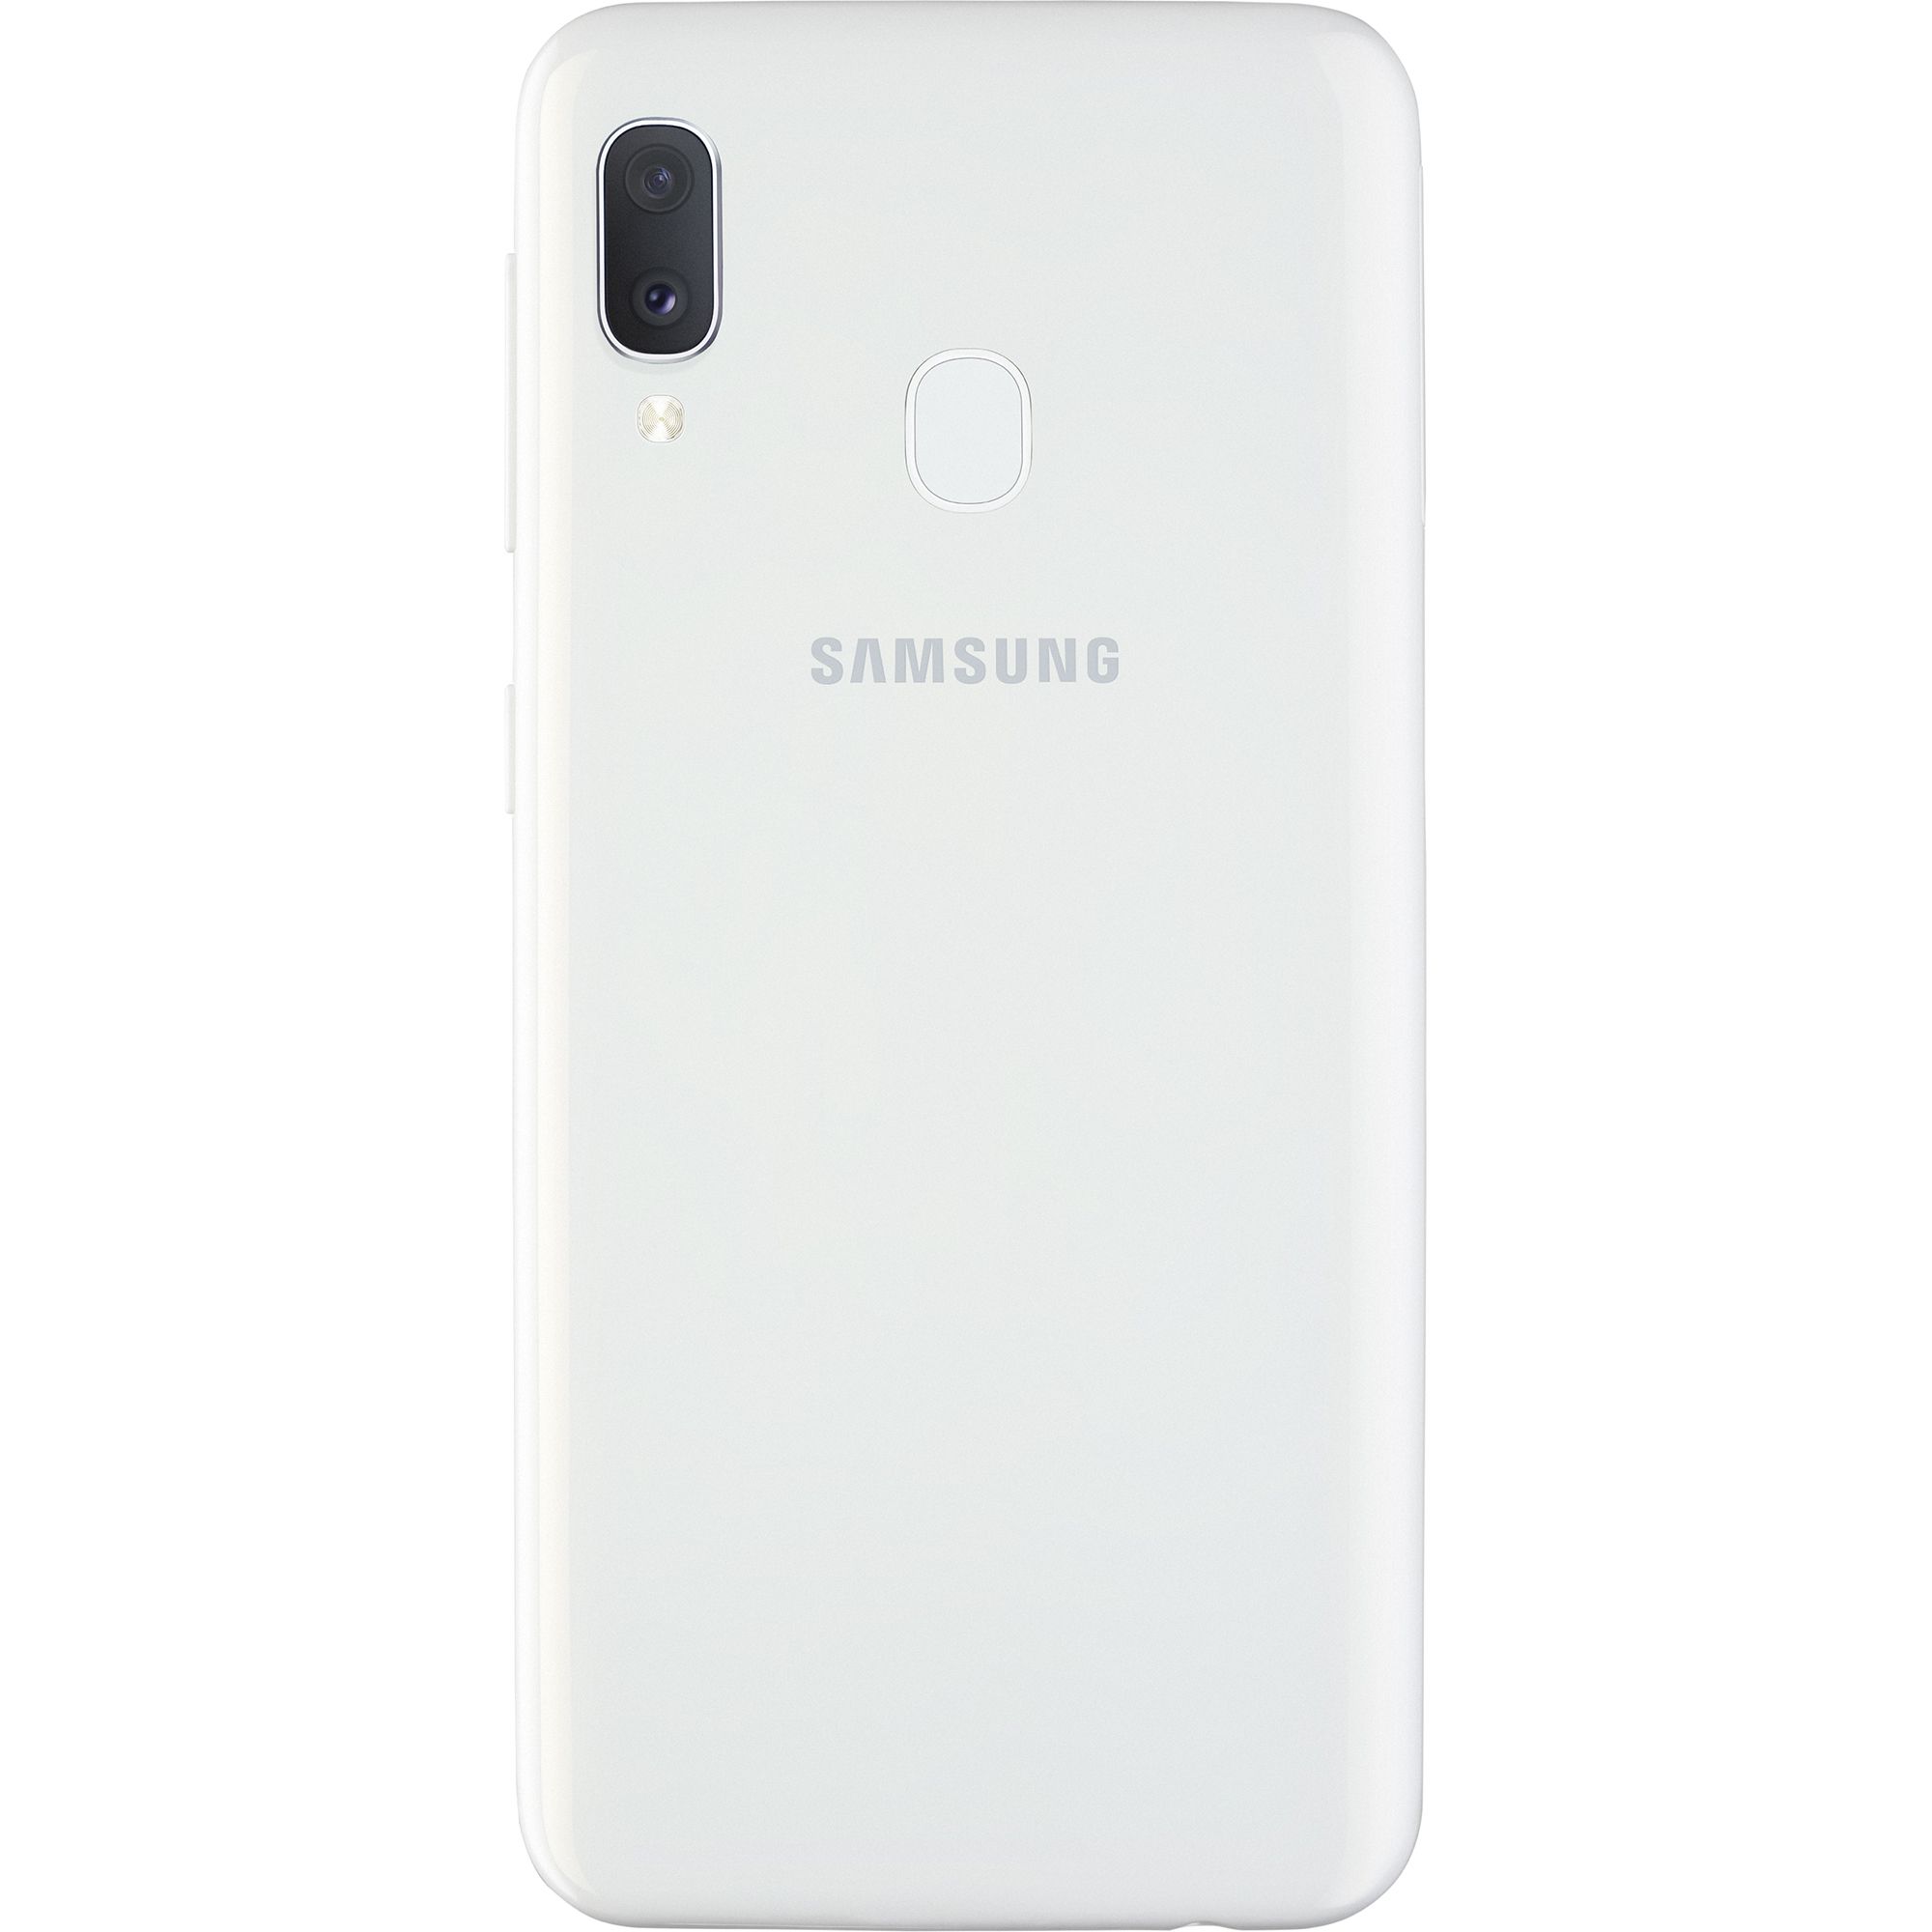 Samsung Galaxy A20e Telefon Mobil Dual Sim Lte 5 8 3gb Ram 32gb